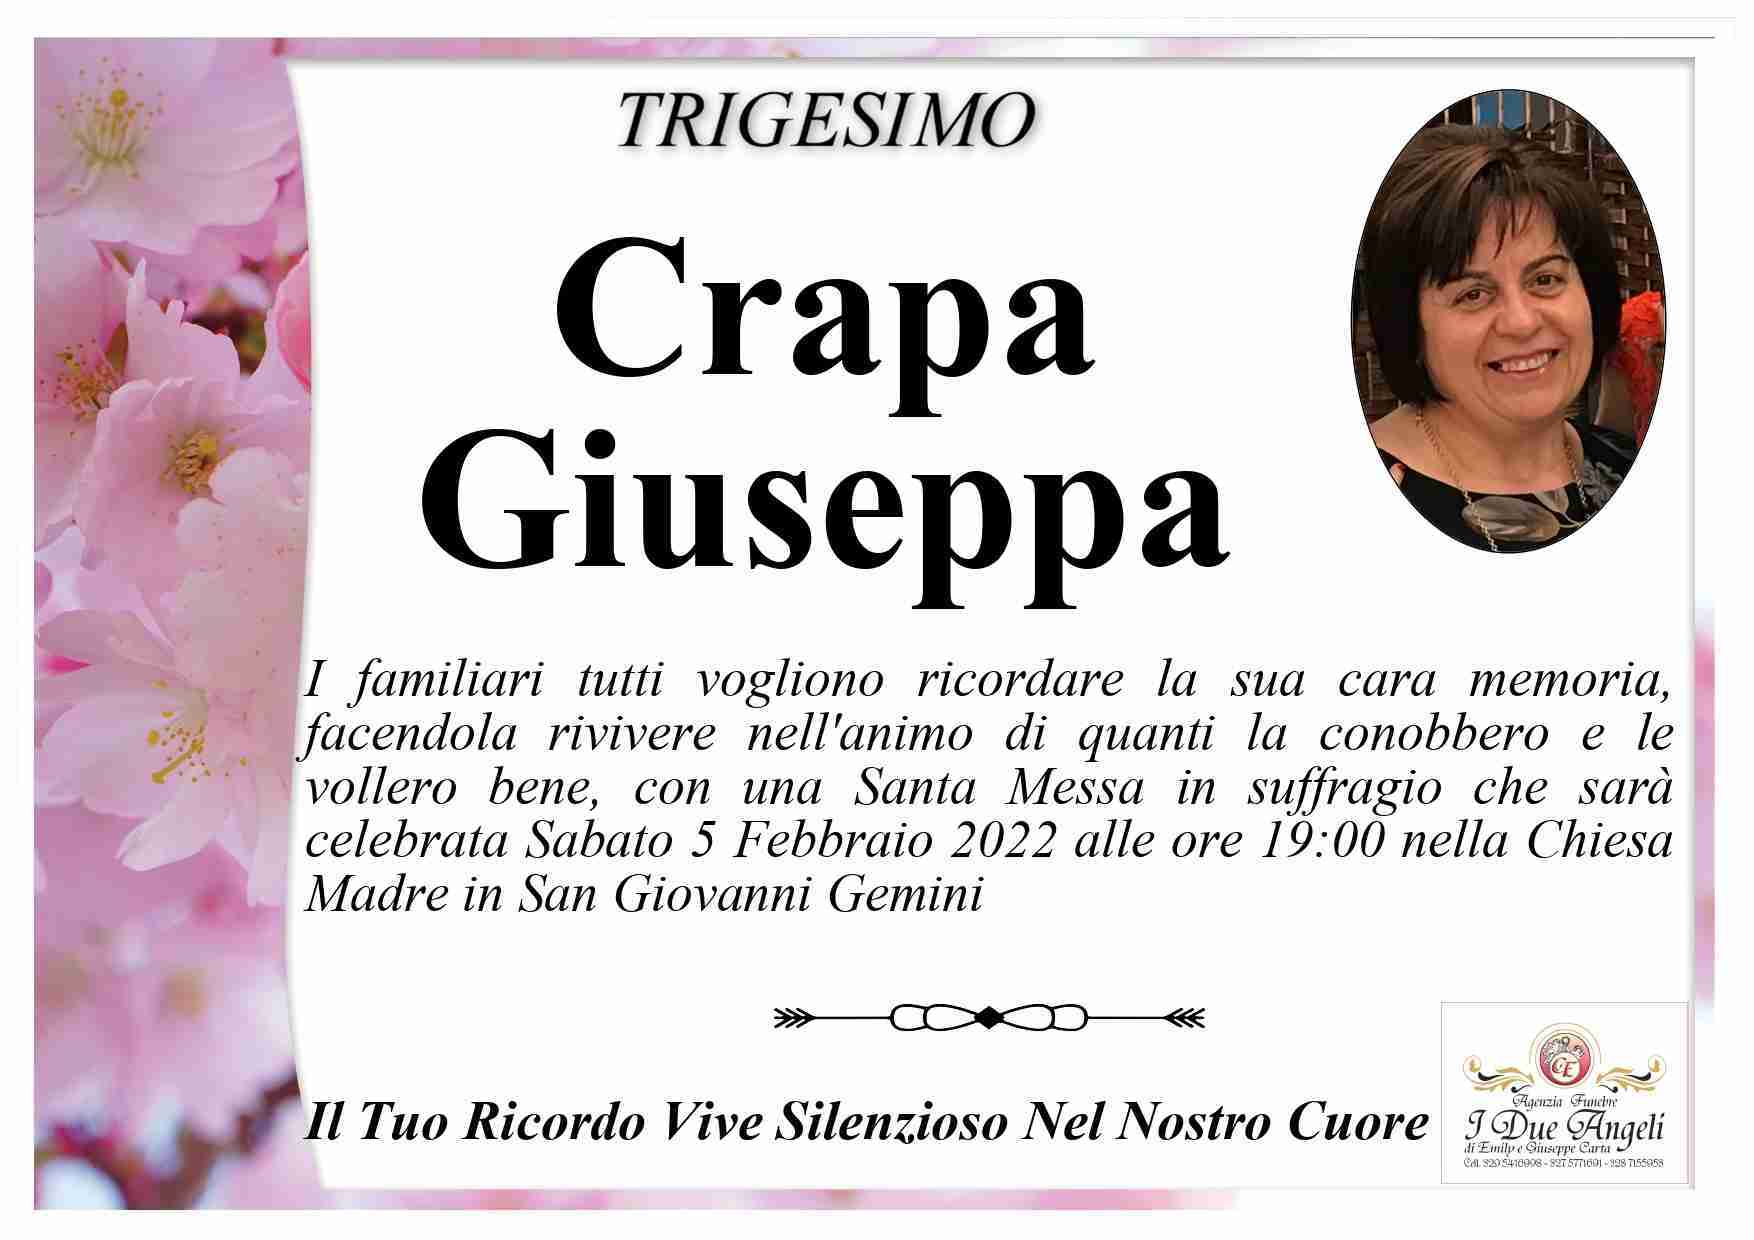 Giuseppa Crapa